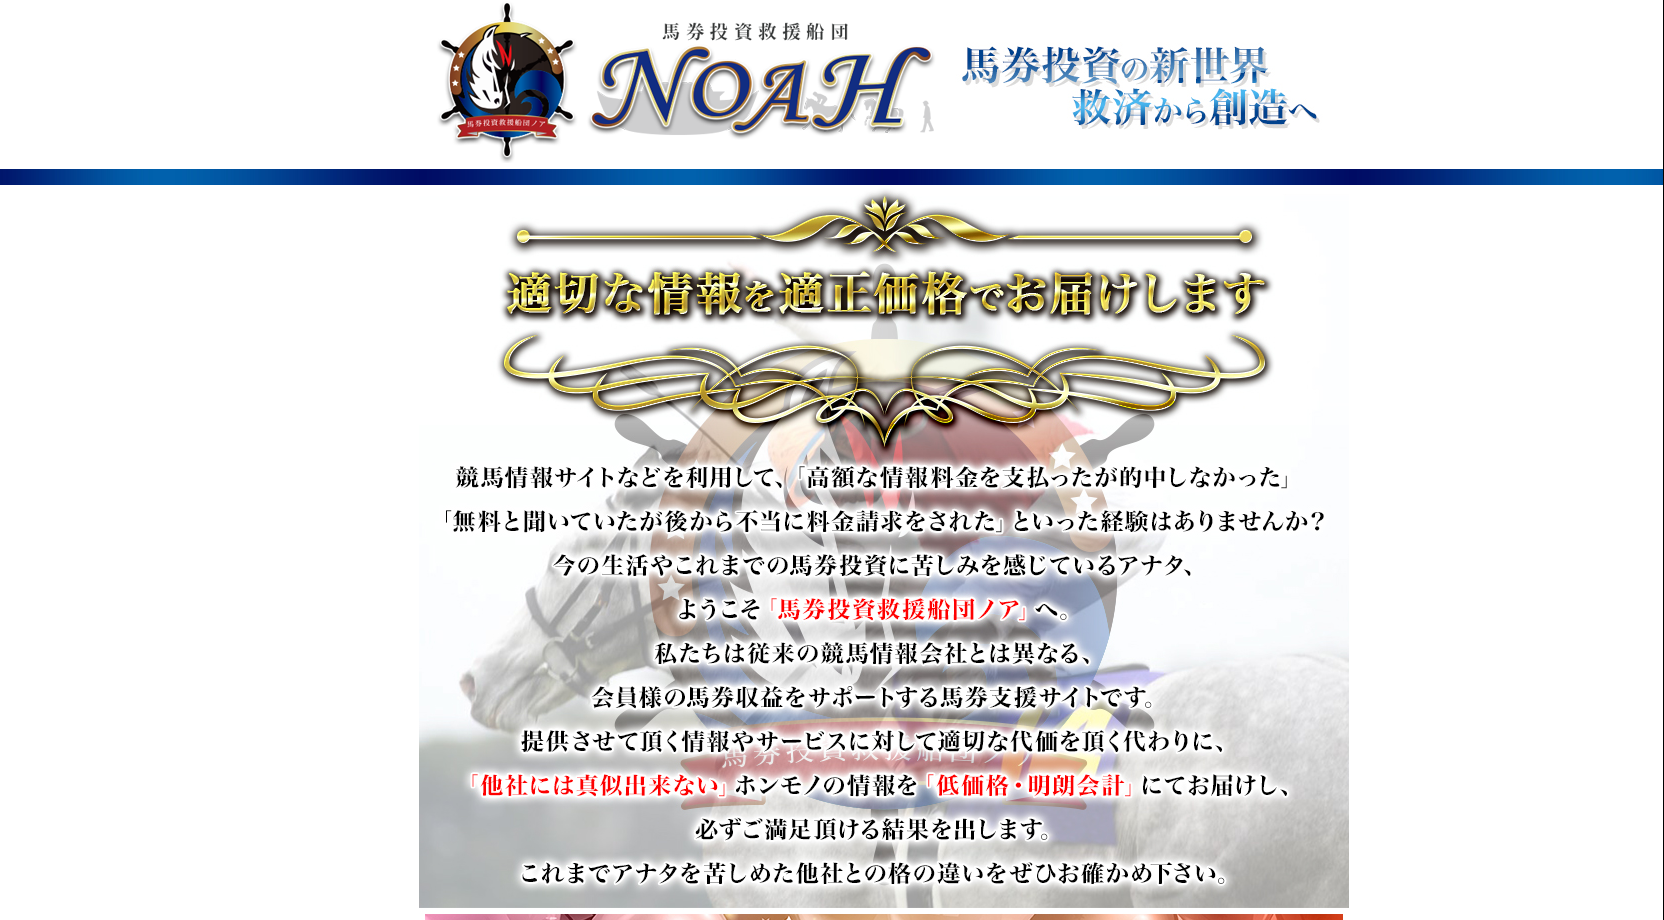 悪徳・悪質競馬予想サイト 馬券投資救援船団ノア(NOAH)